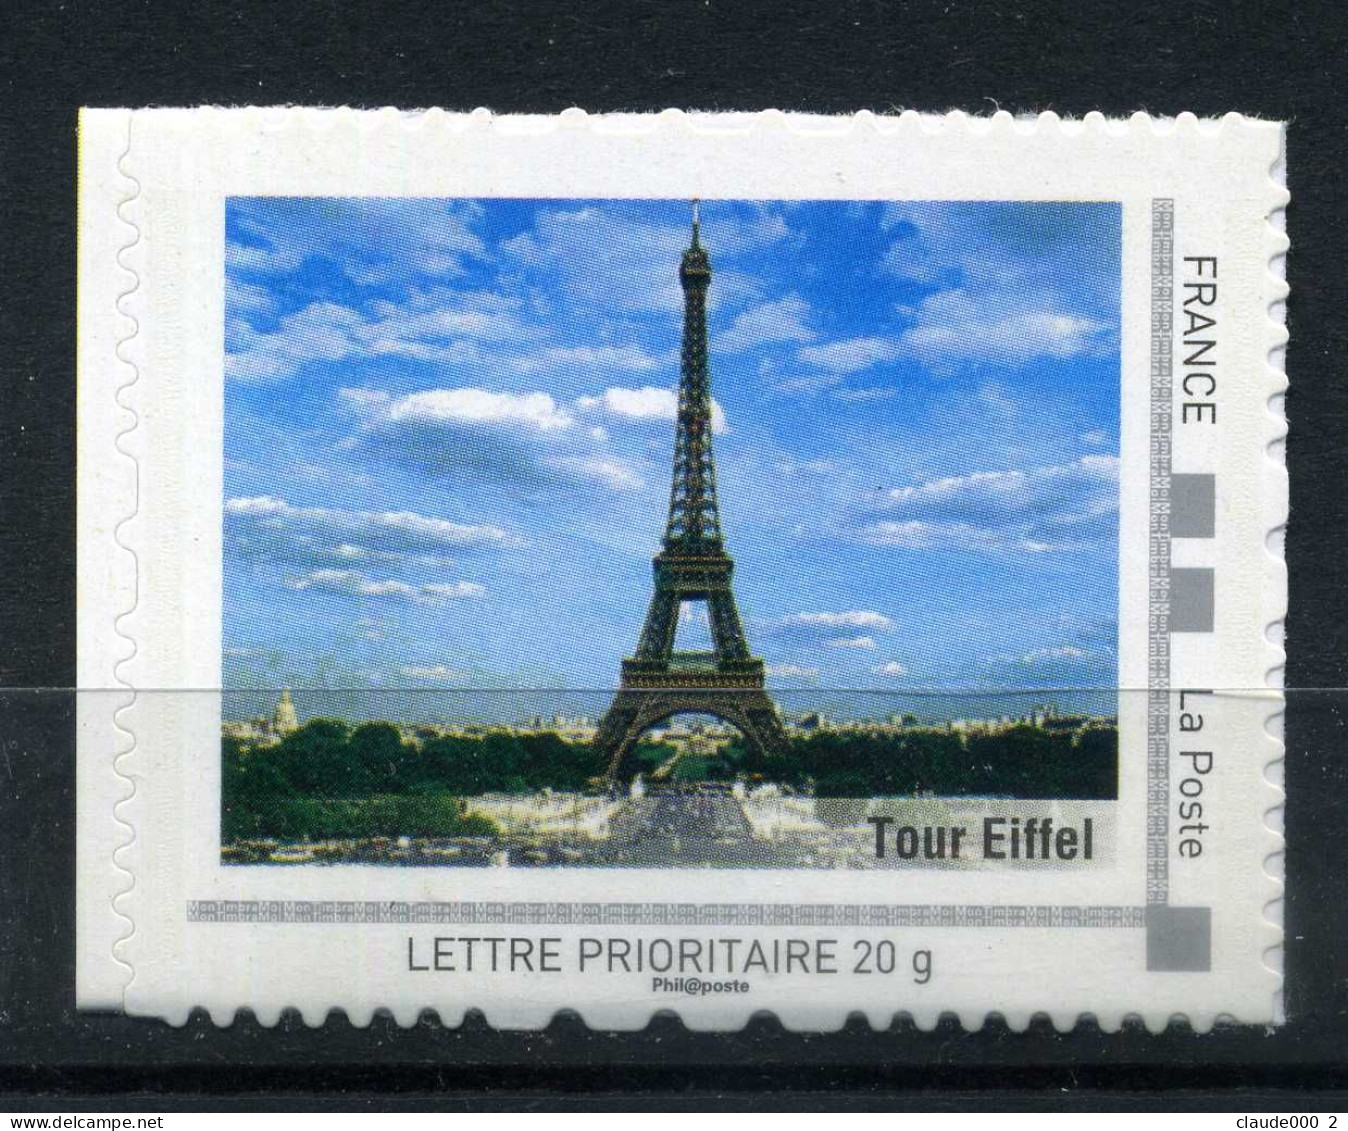 Tour Eiffel  Adhésif Neuf ** . Collector Paris 2009 - Collectors